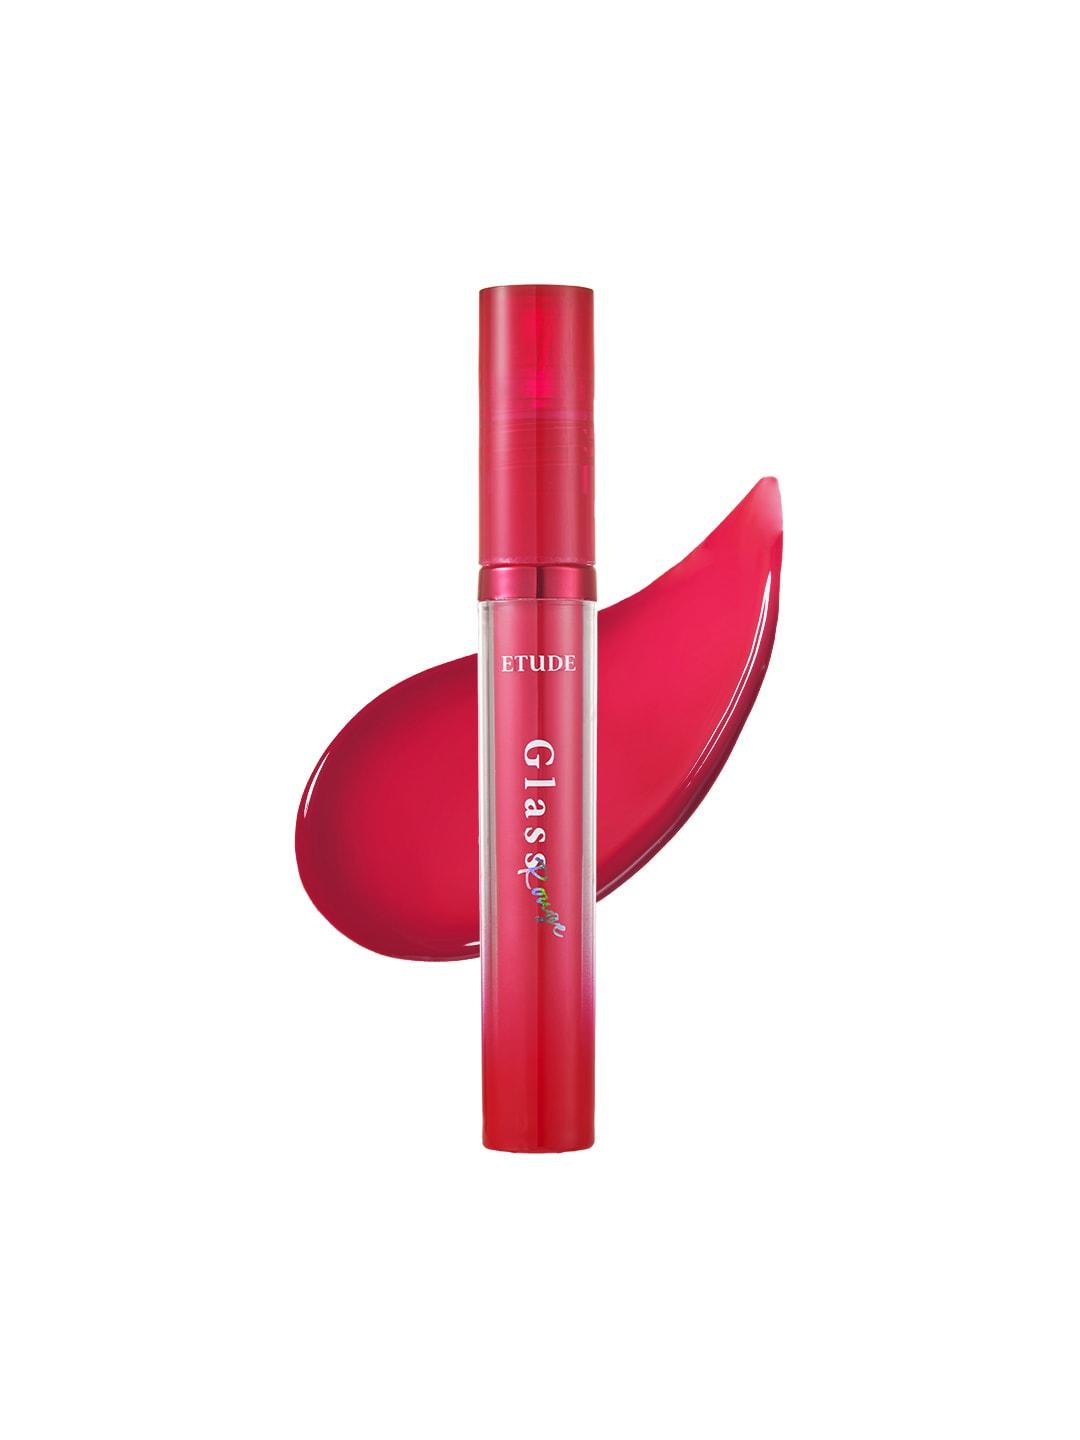 etude long lasting glass rouge tint lipstick 3.2 g - cherry crush rd303